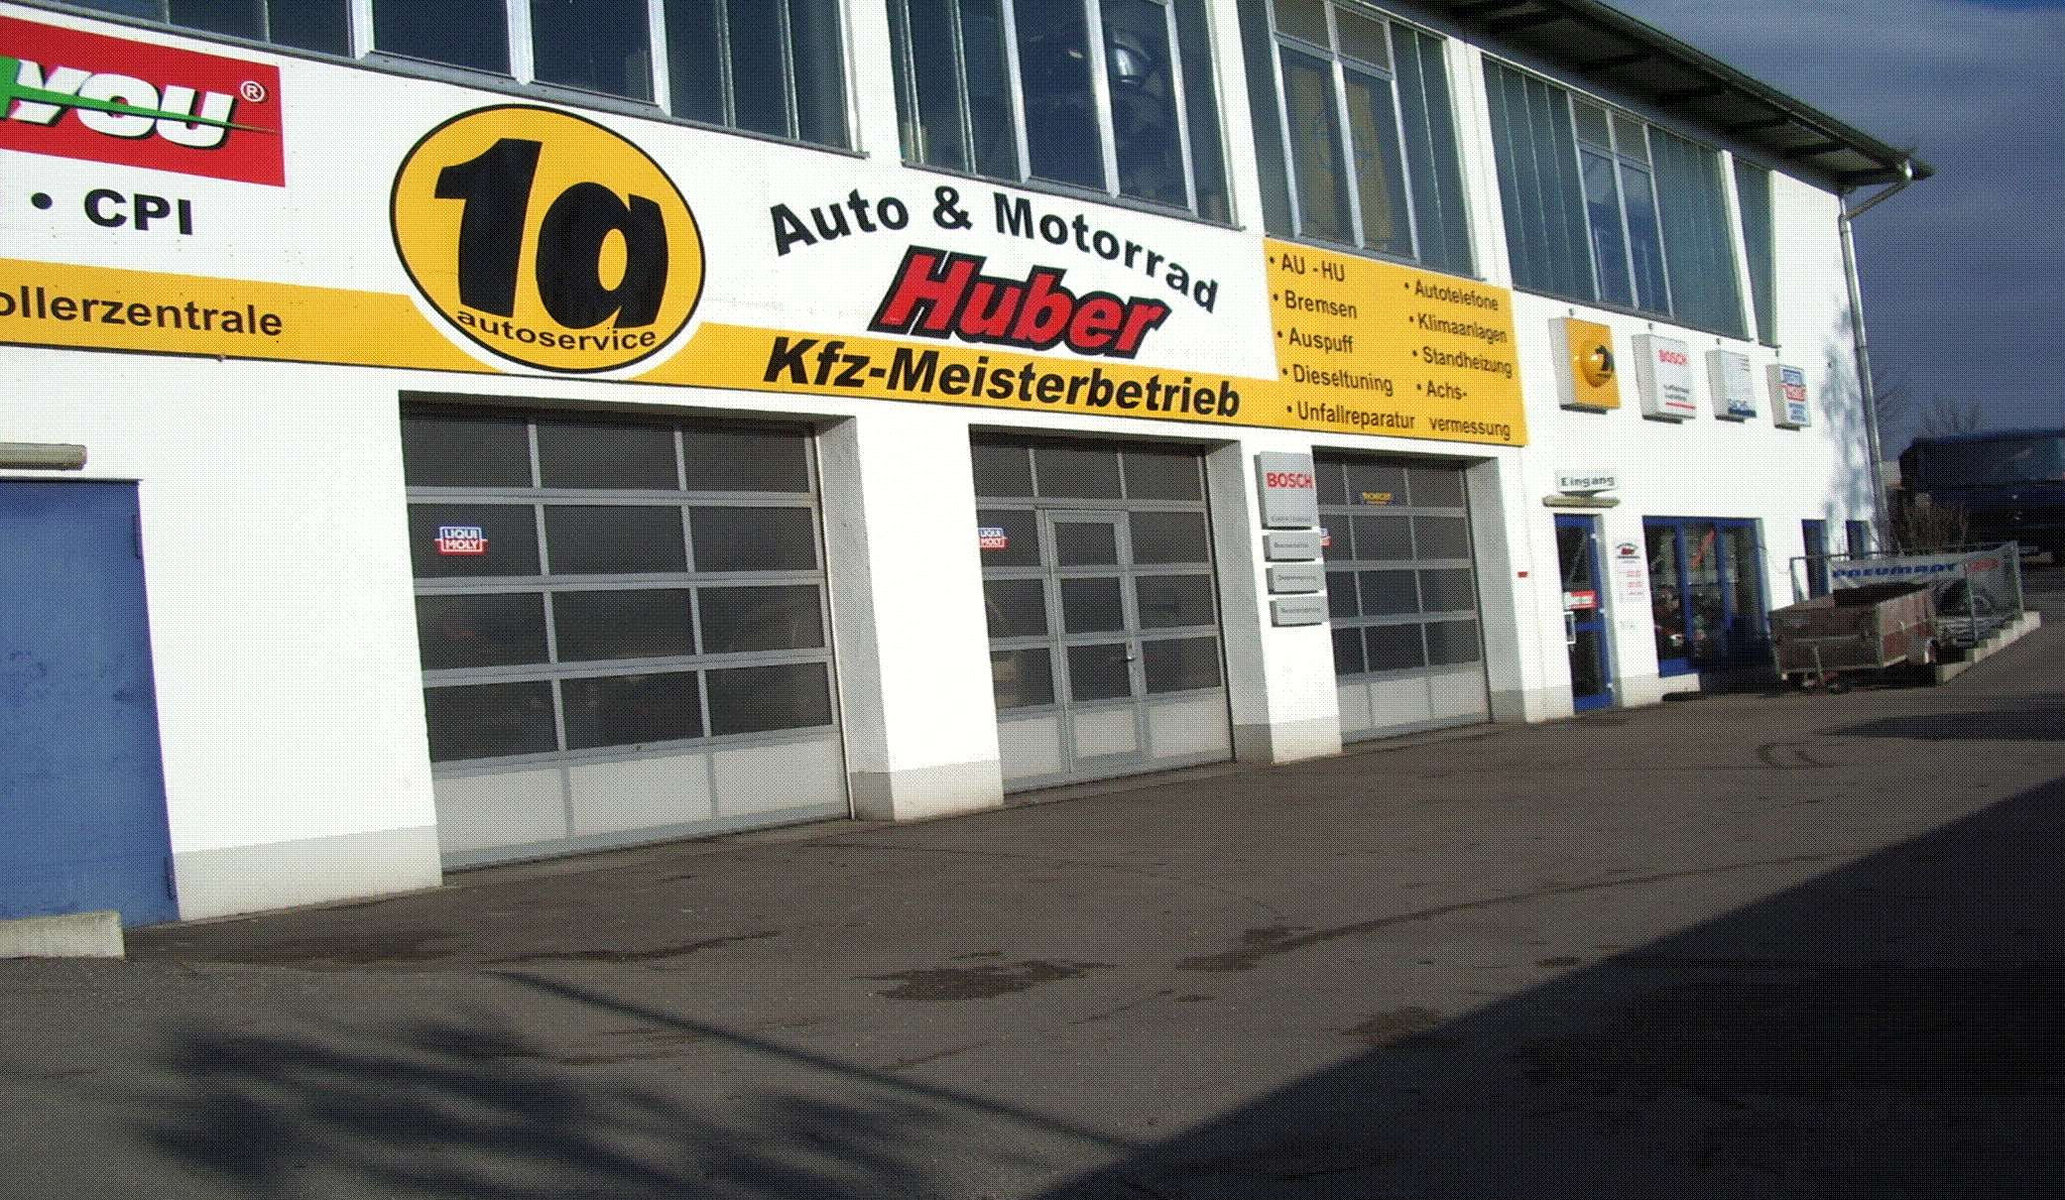 Auto & Motorrad Huber Kfz-Meisterbetrieb